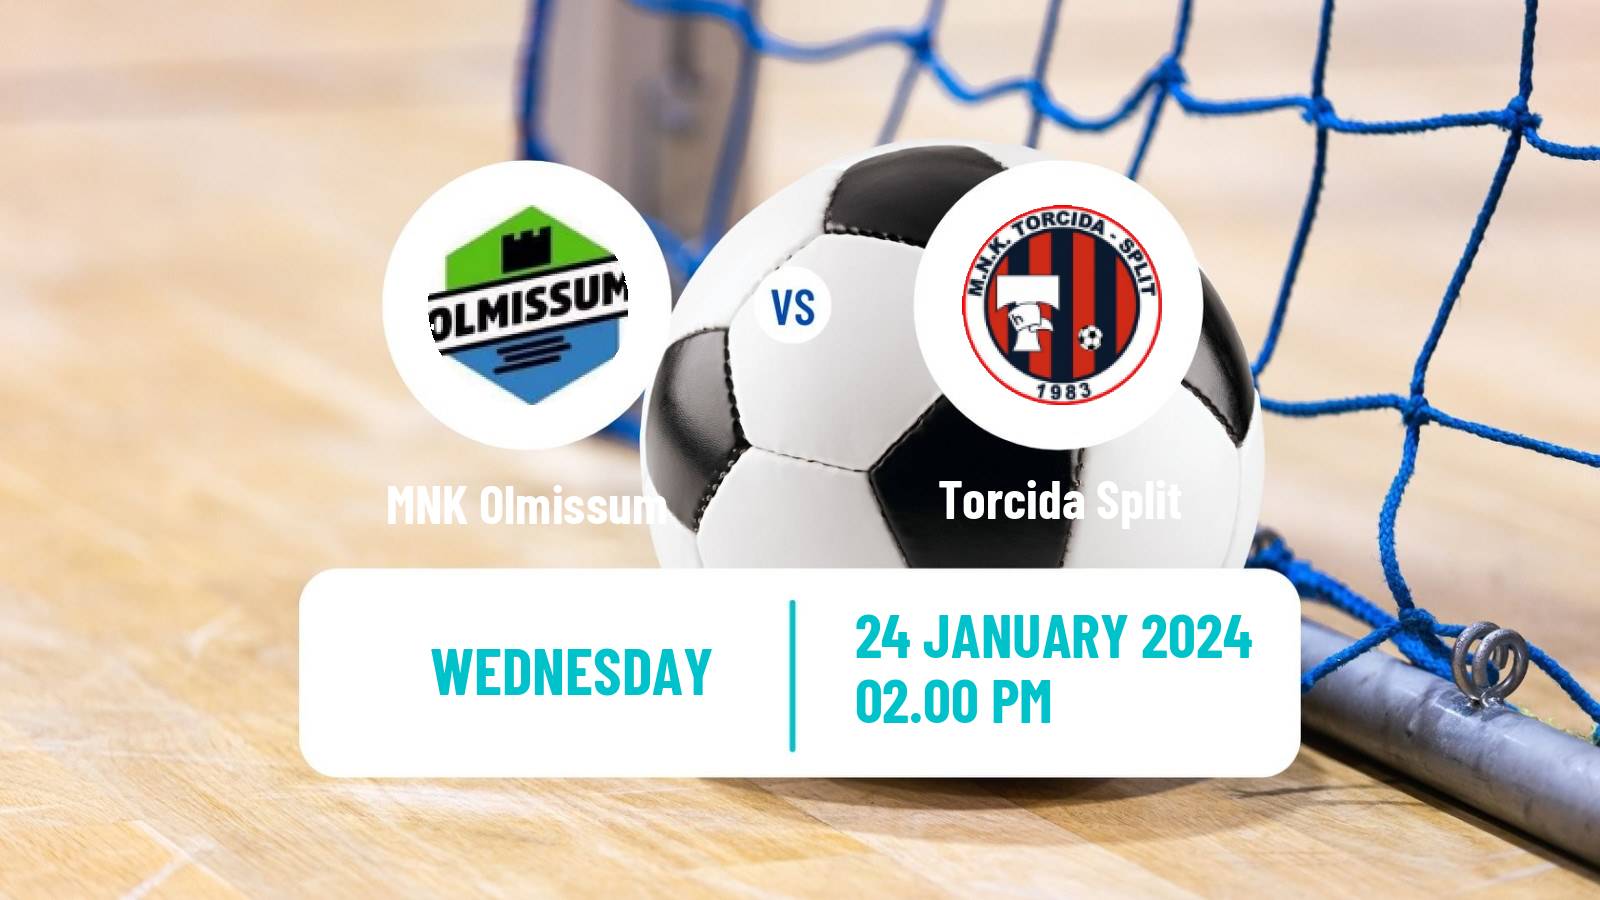 Futsal Croatian 1 HMNL Olmissum - Torcida Split